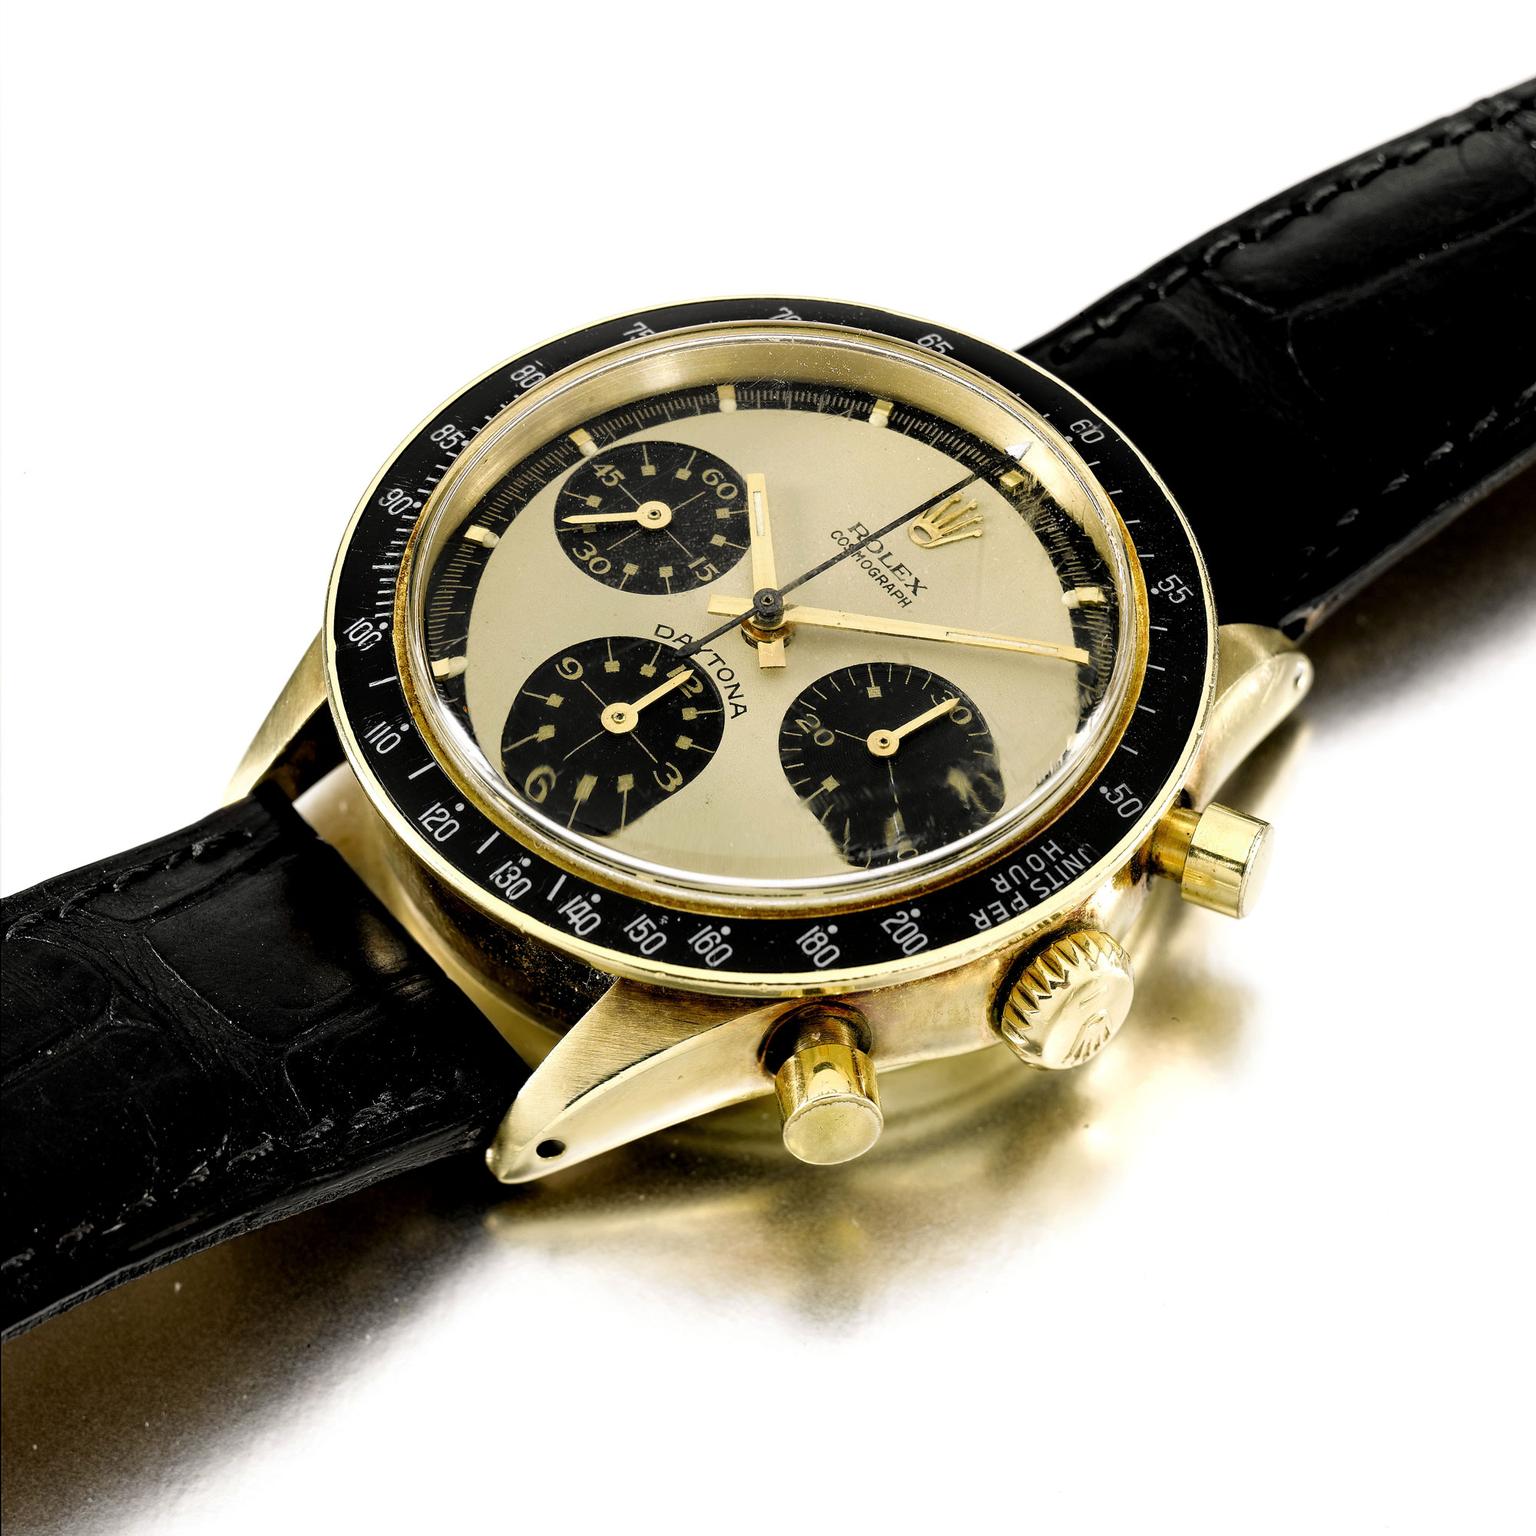 Rolex Cosmograph Daytona Paul Newman yellow gold watch